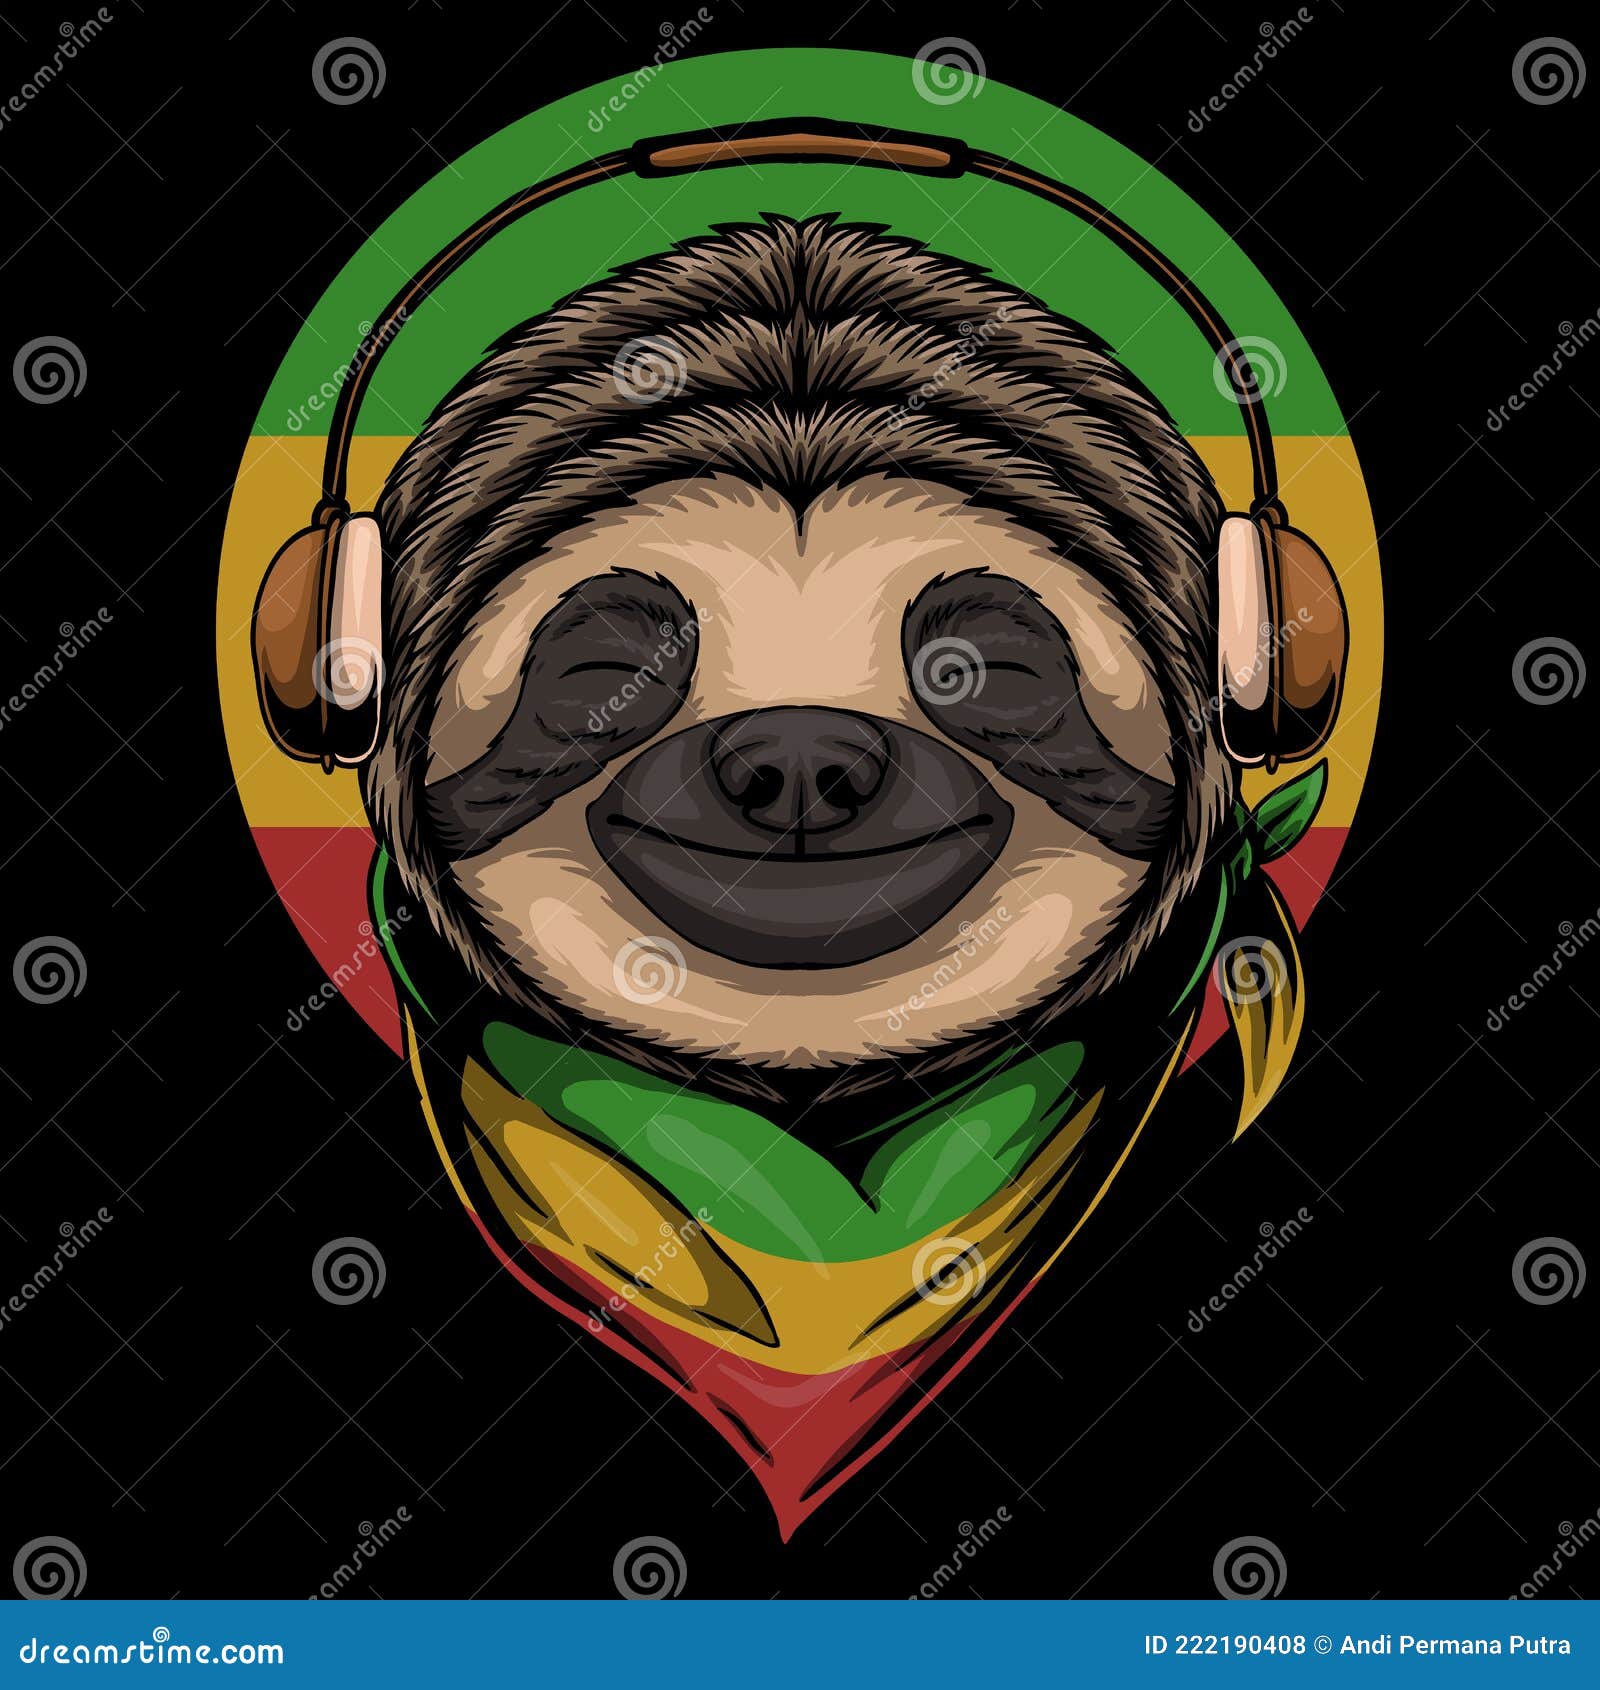 sloth rasta a wearing headphones  